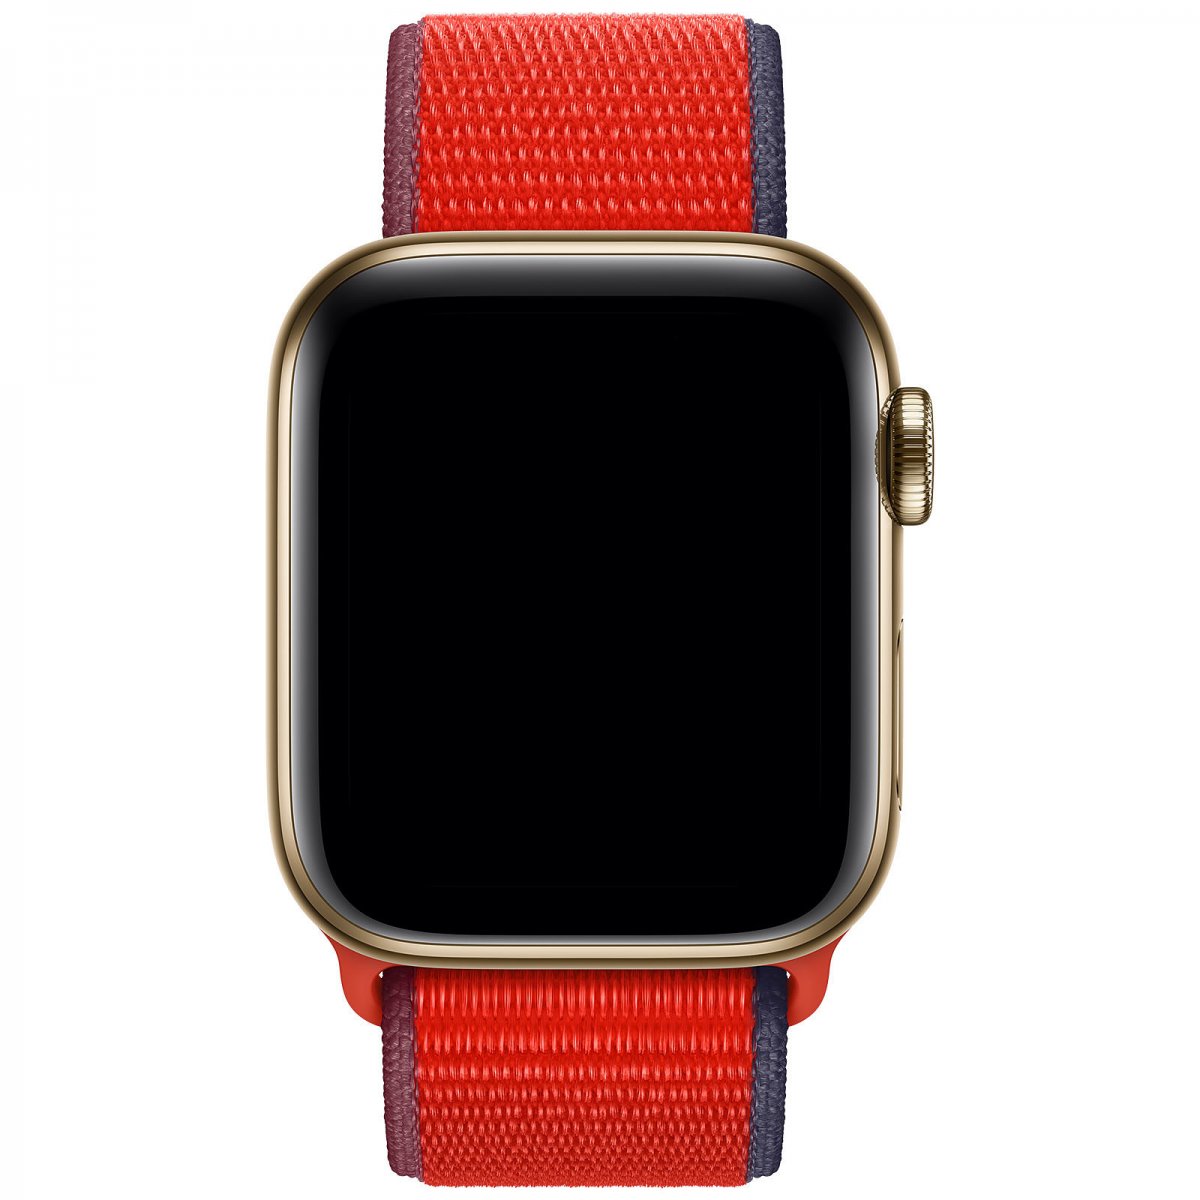 Řemínek iMore NYLON Apple Watch Series 1/2/3 38mm - Red 2020